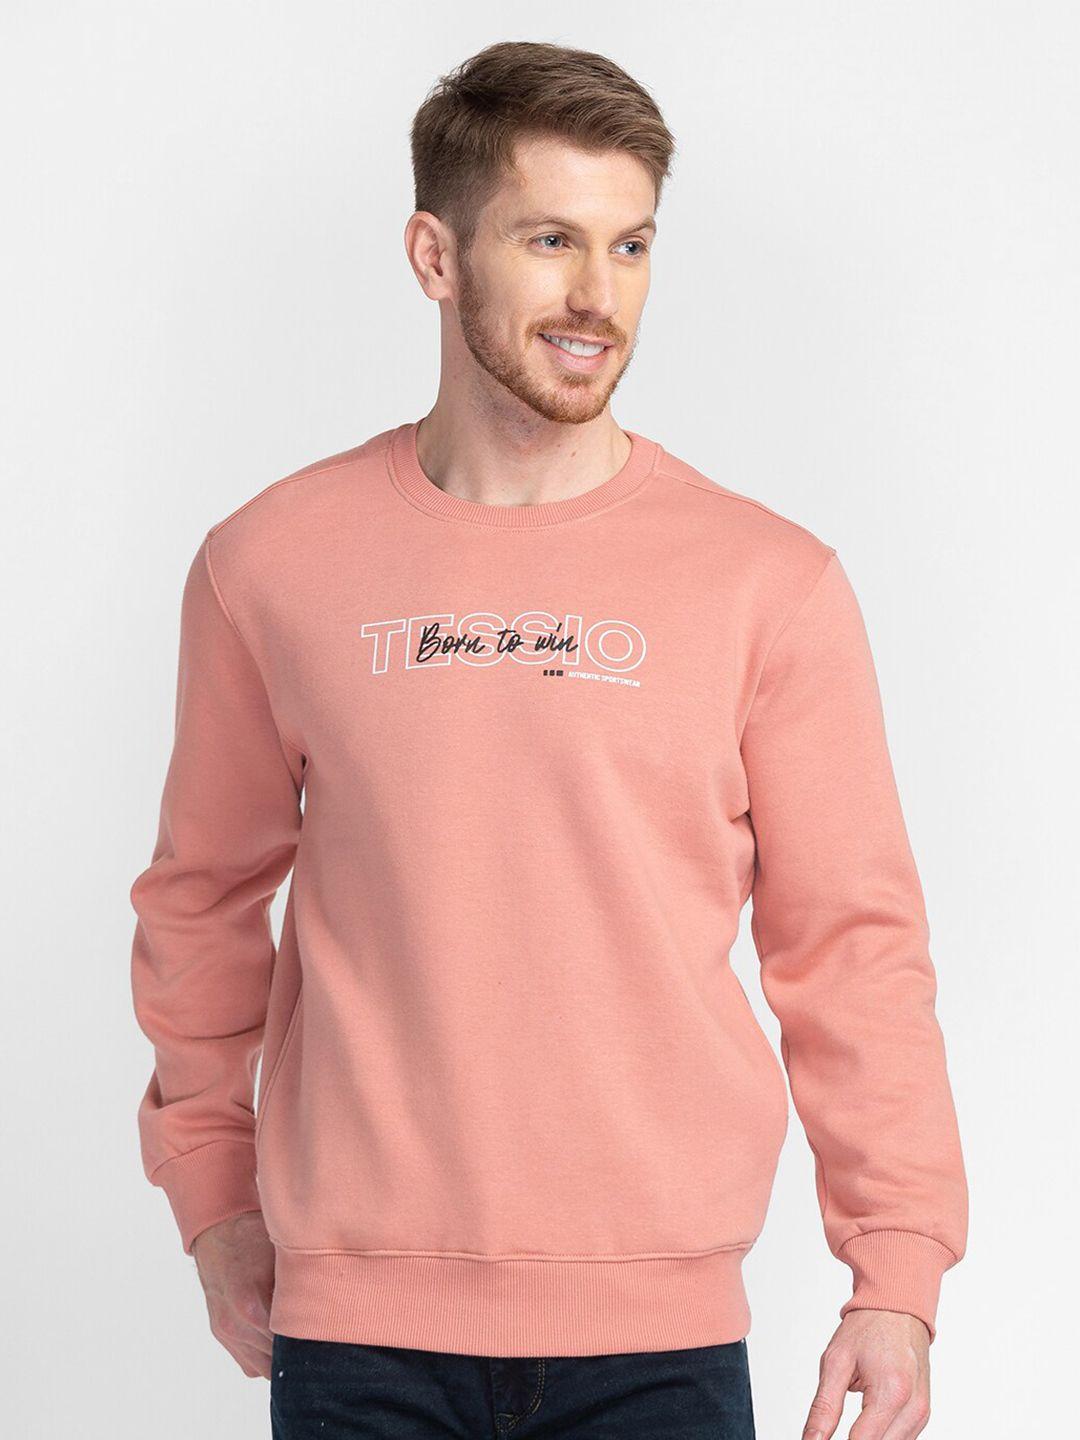 tessio-men-peach-coloured-sweatshirt